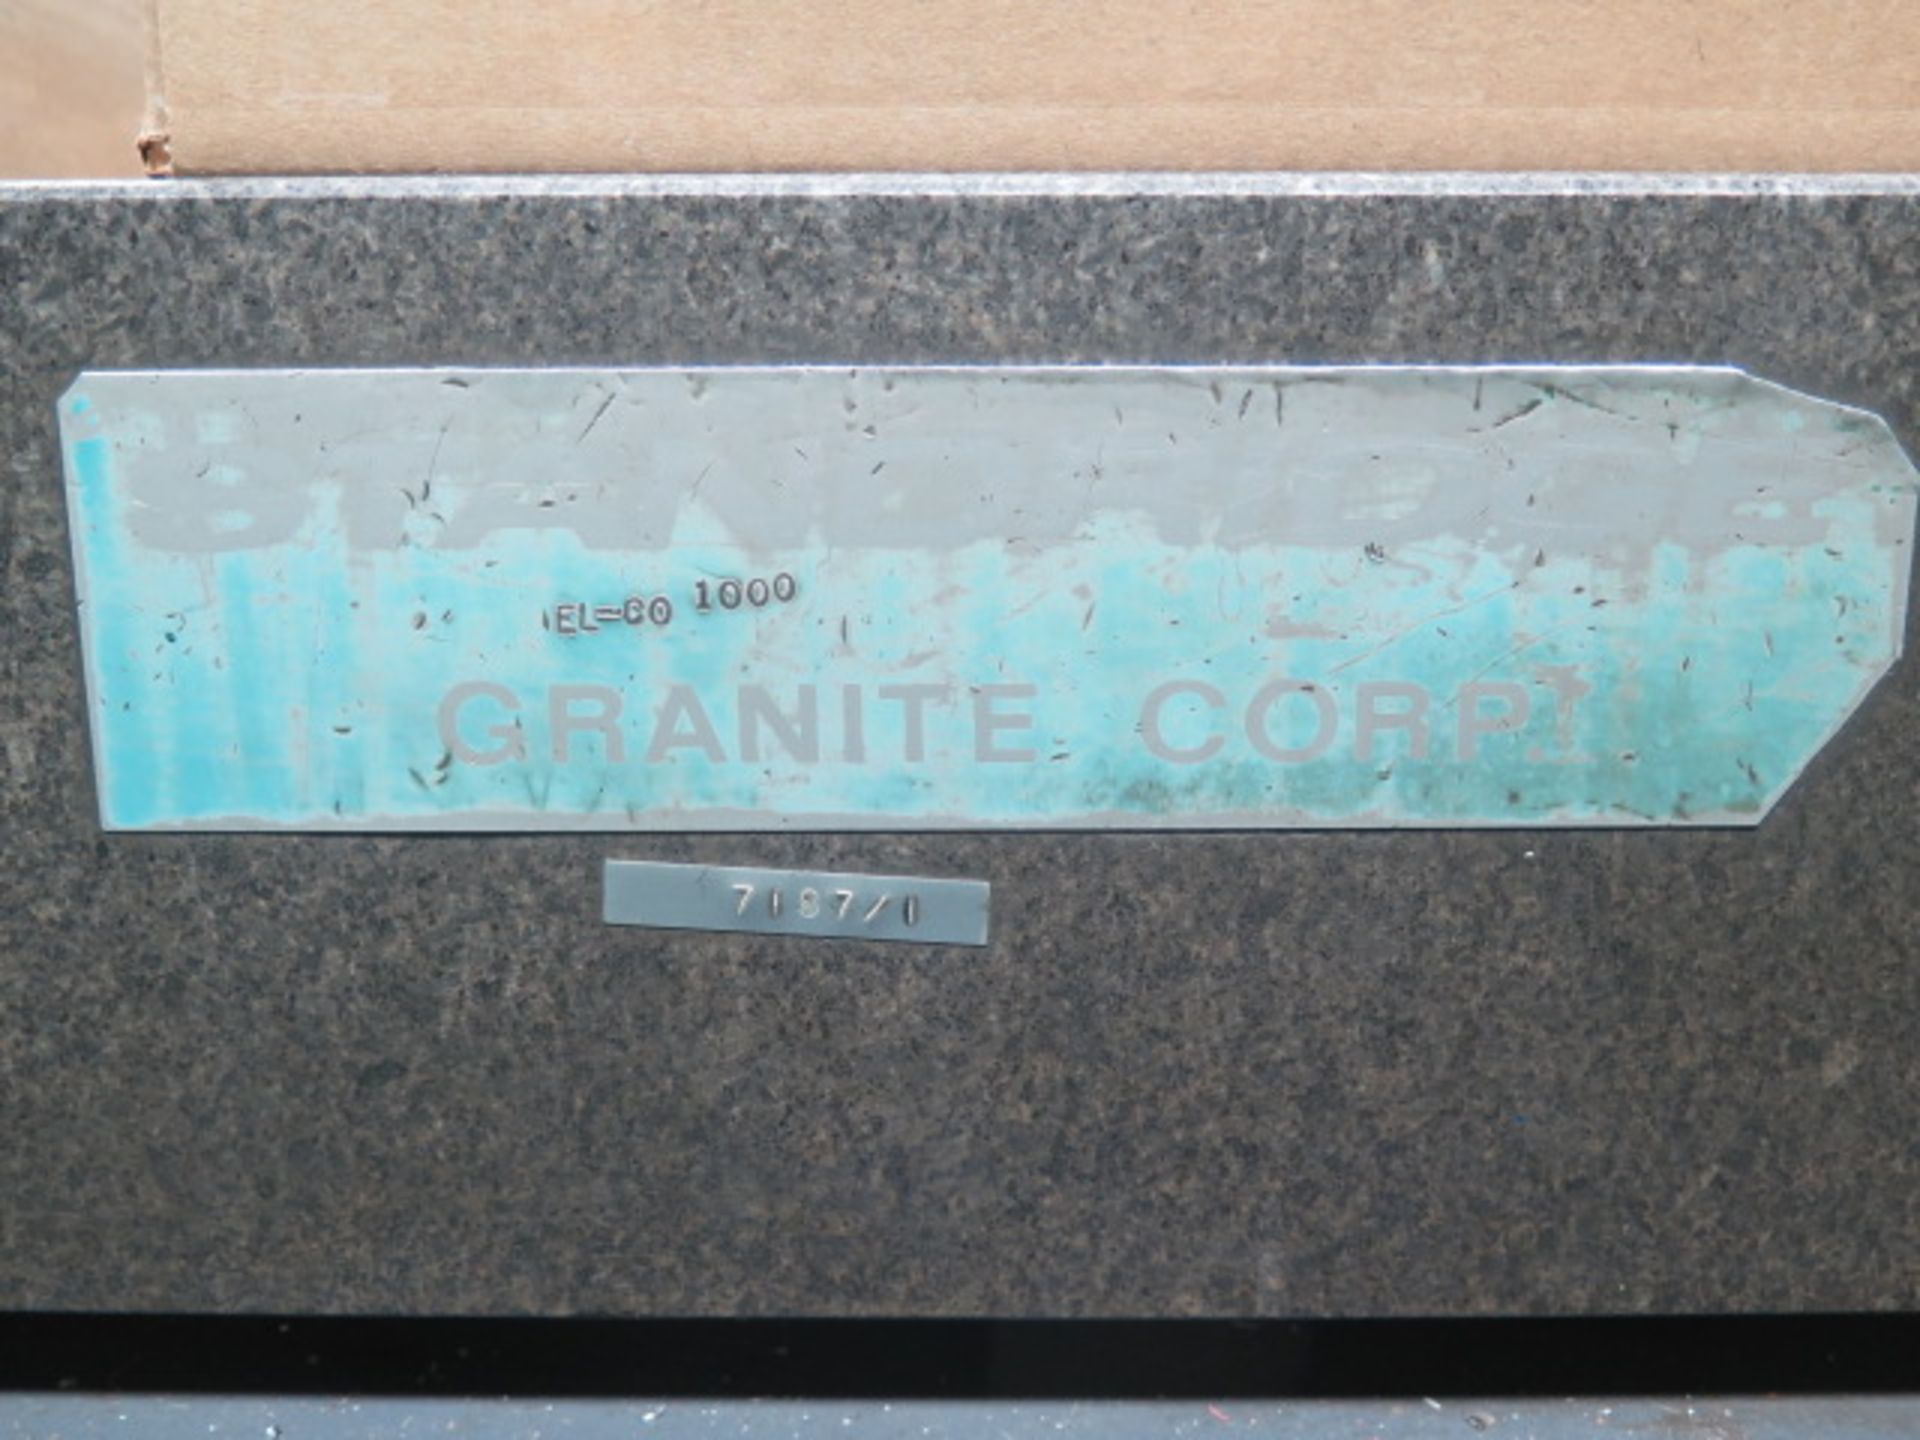 Standridge 36” x 60” x 6 ½” 2-Ledge Granite Surface Plate w/ Stand - Image 2 of 2